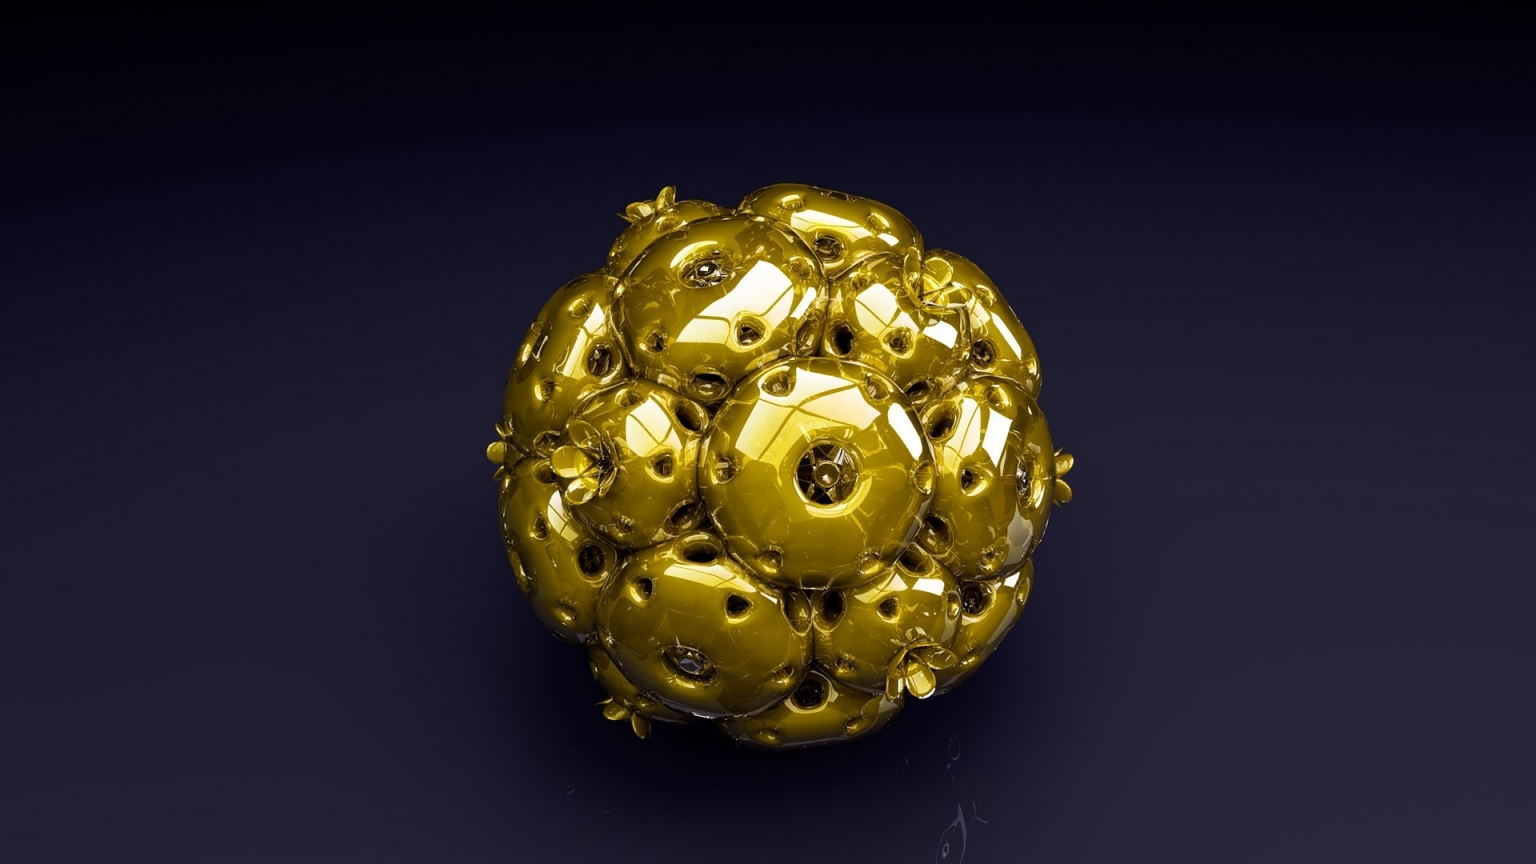 Gold Ball for 1536 x 864 HDTV resolution